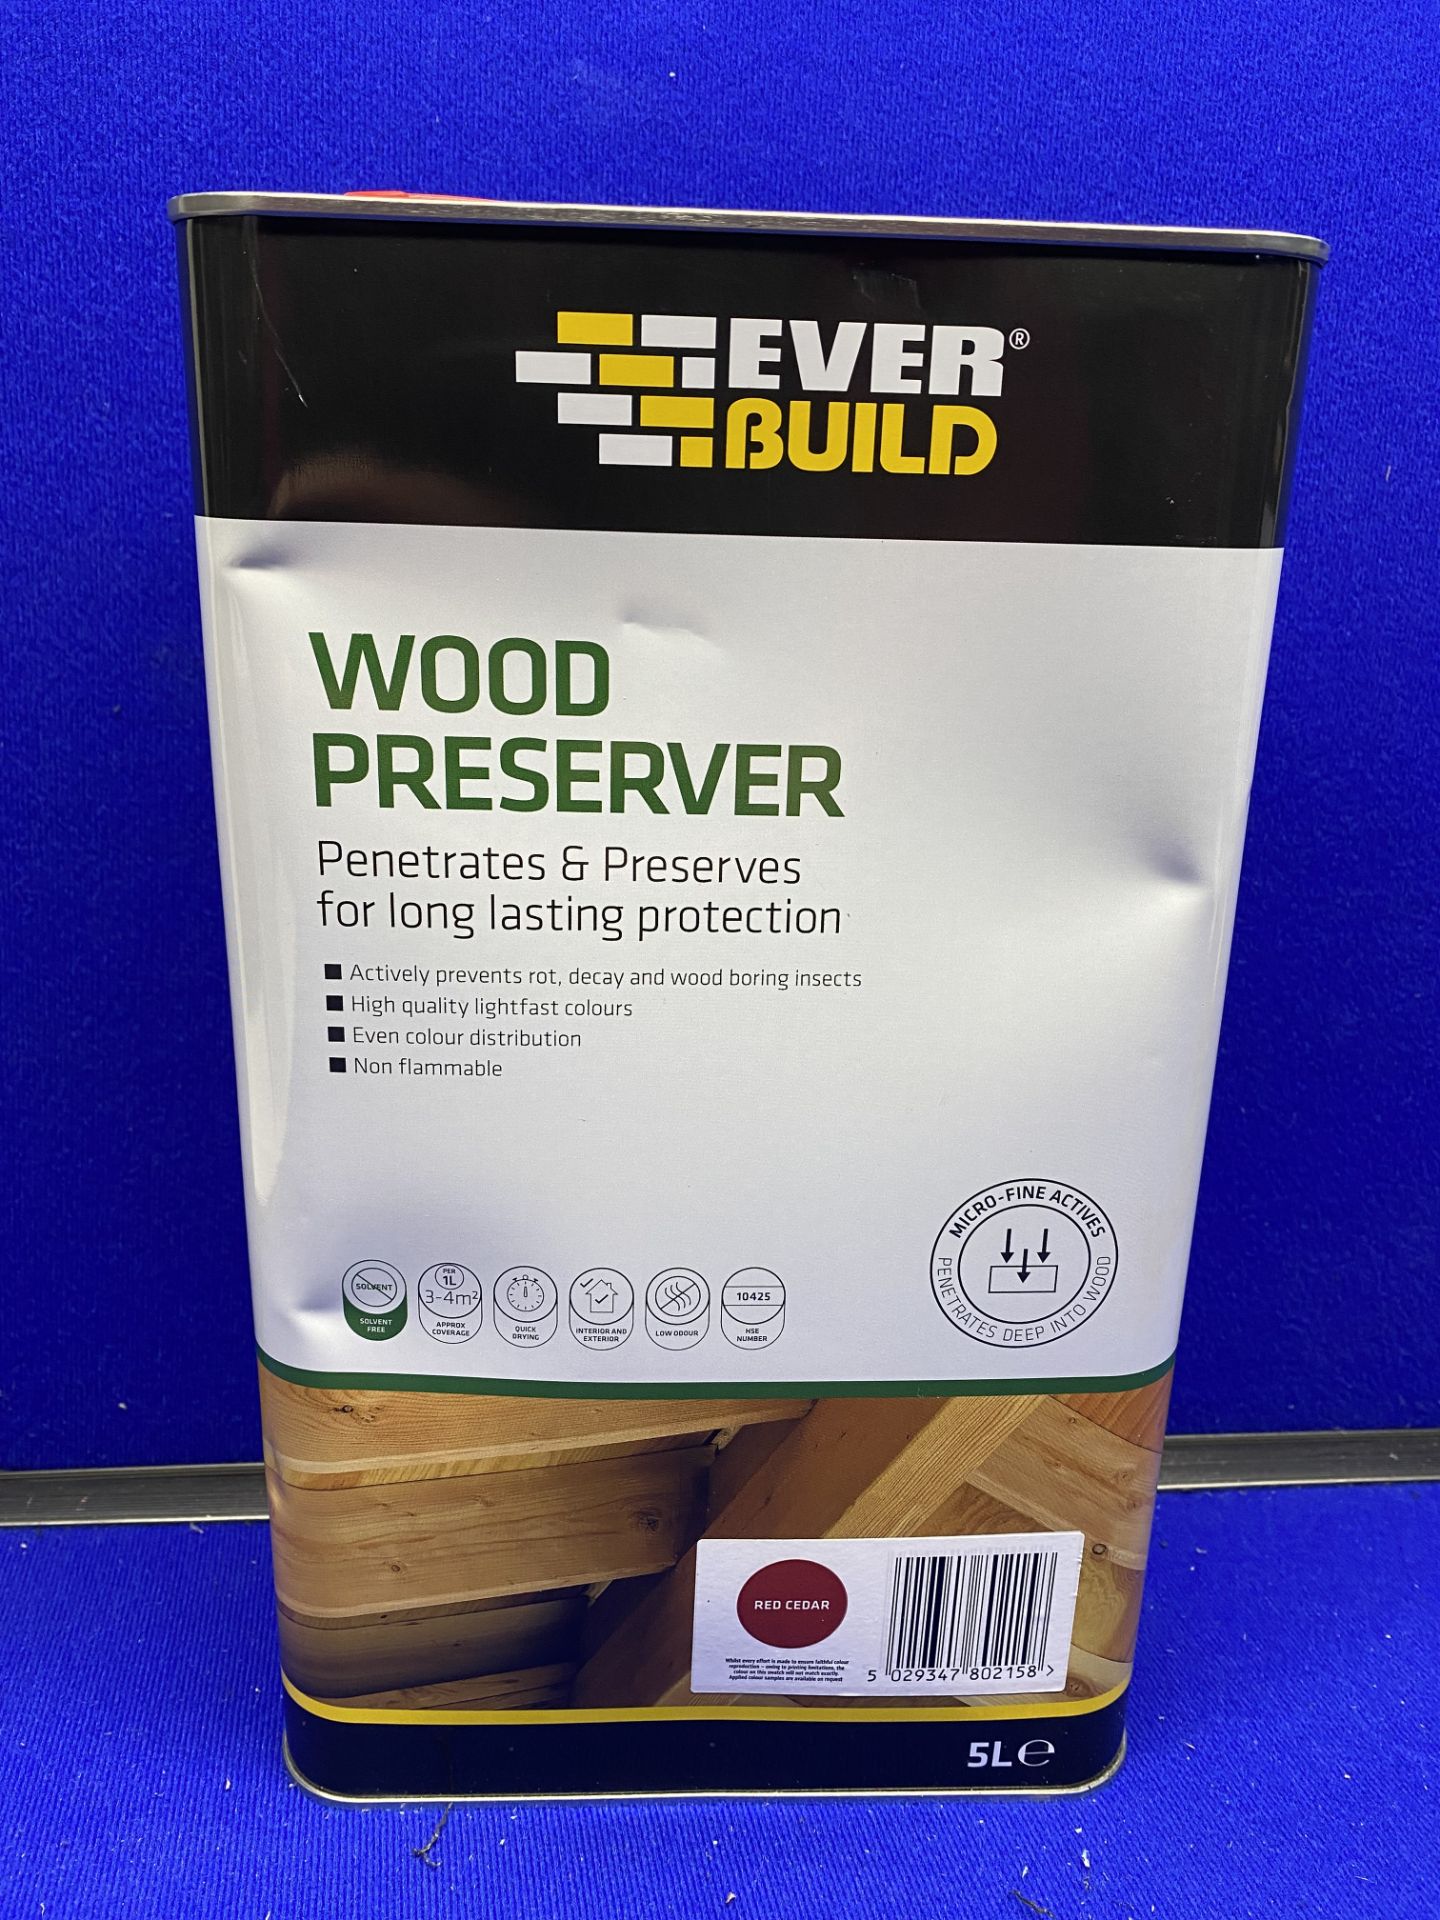 Mixed Lot Of 5L Cans Of Everbuild Wood Preserver & Everbuild Wood Treatment - See Description - Image 2 of 7